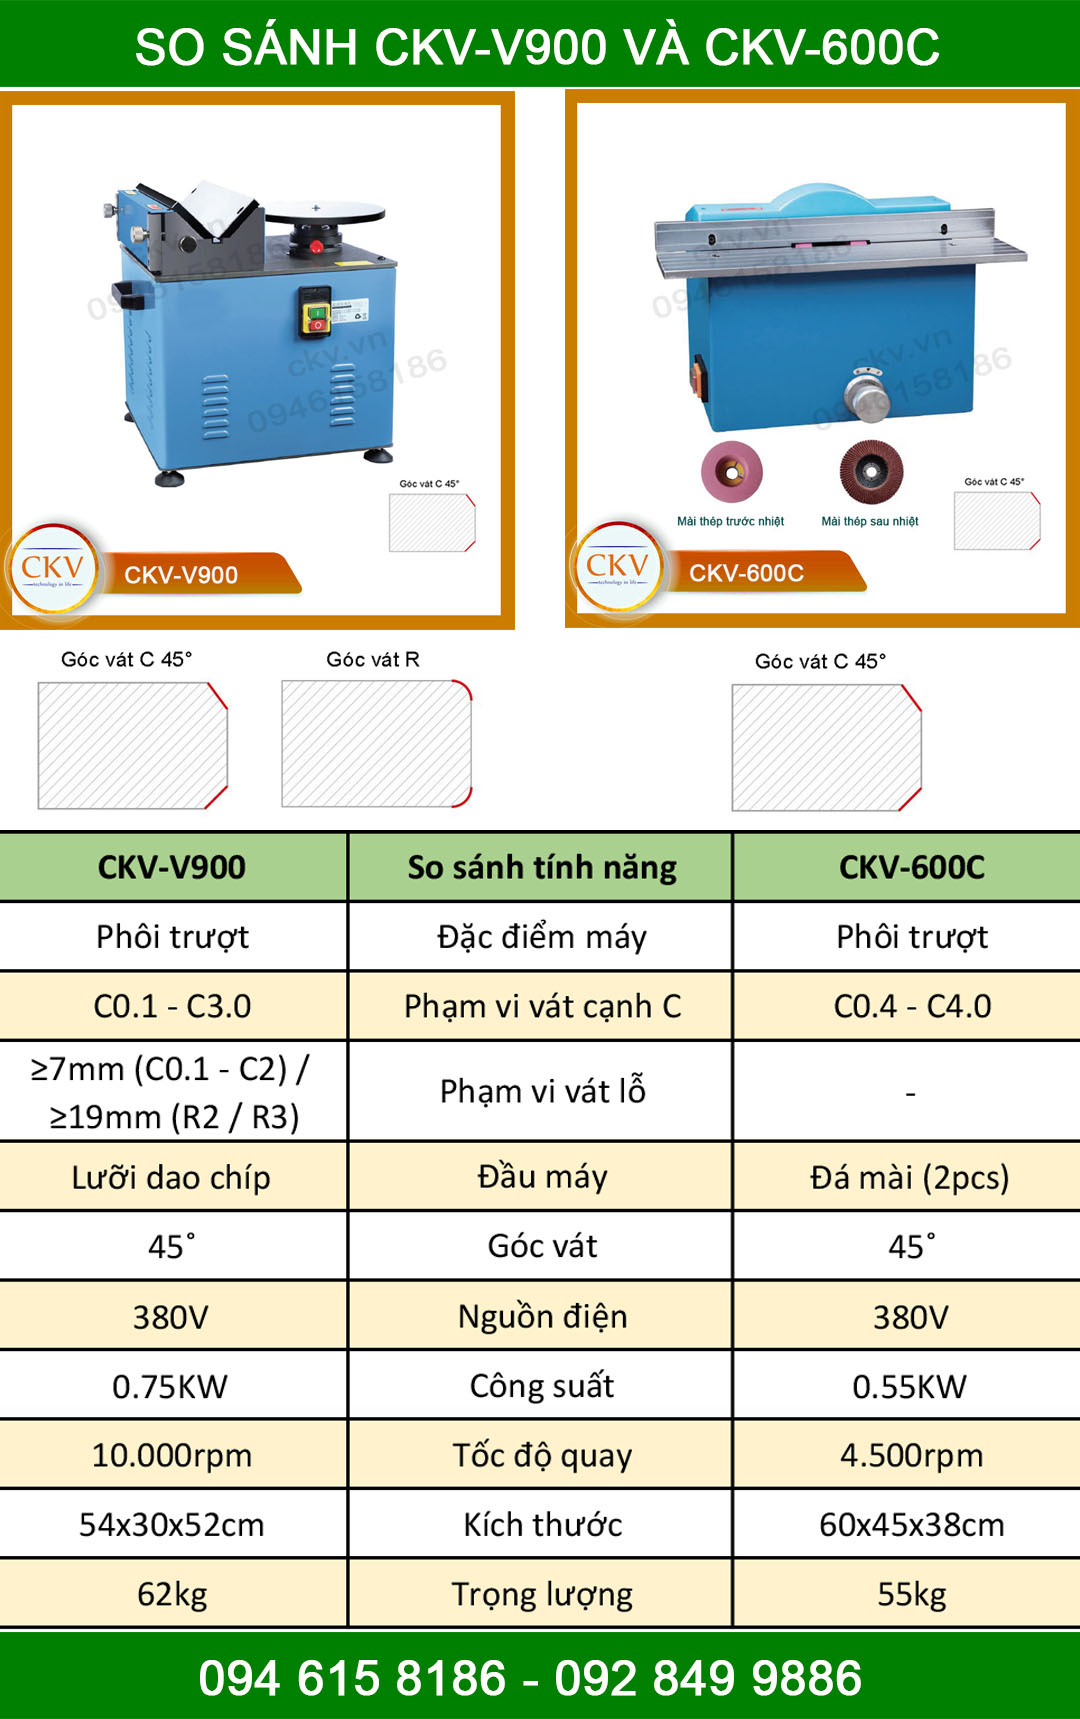 So sánh CKV-V900 với CKV-600C